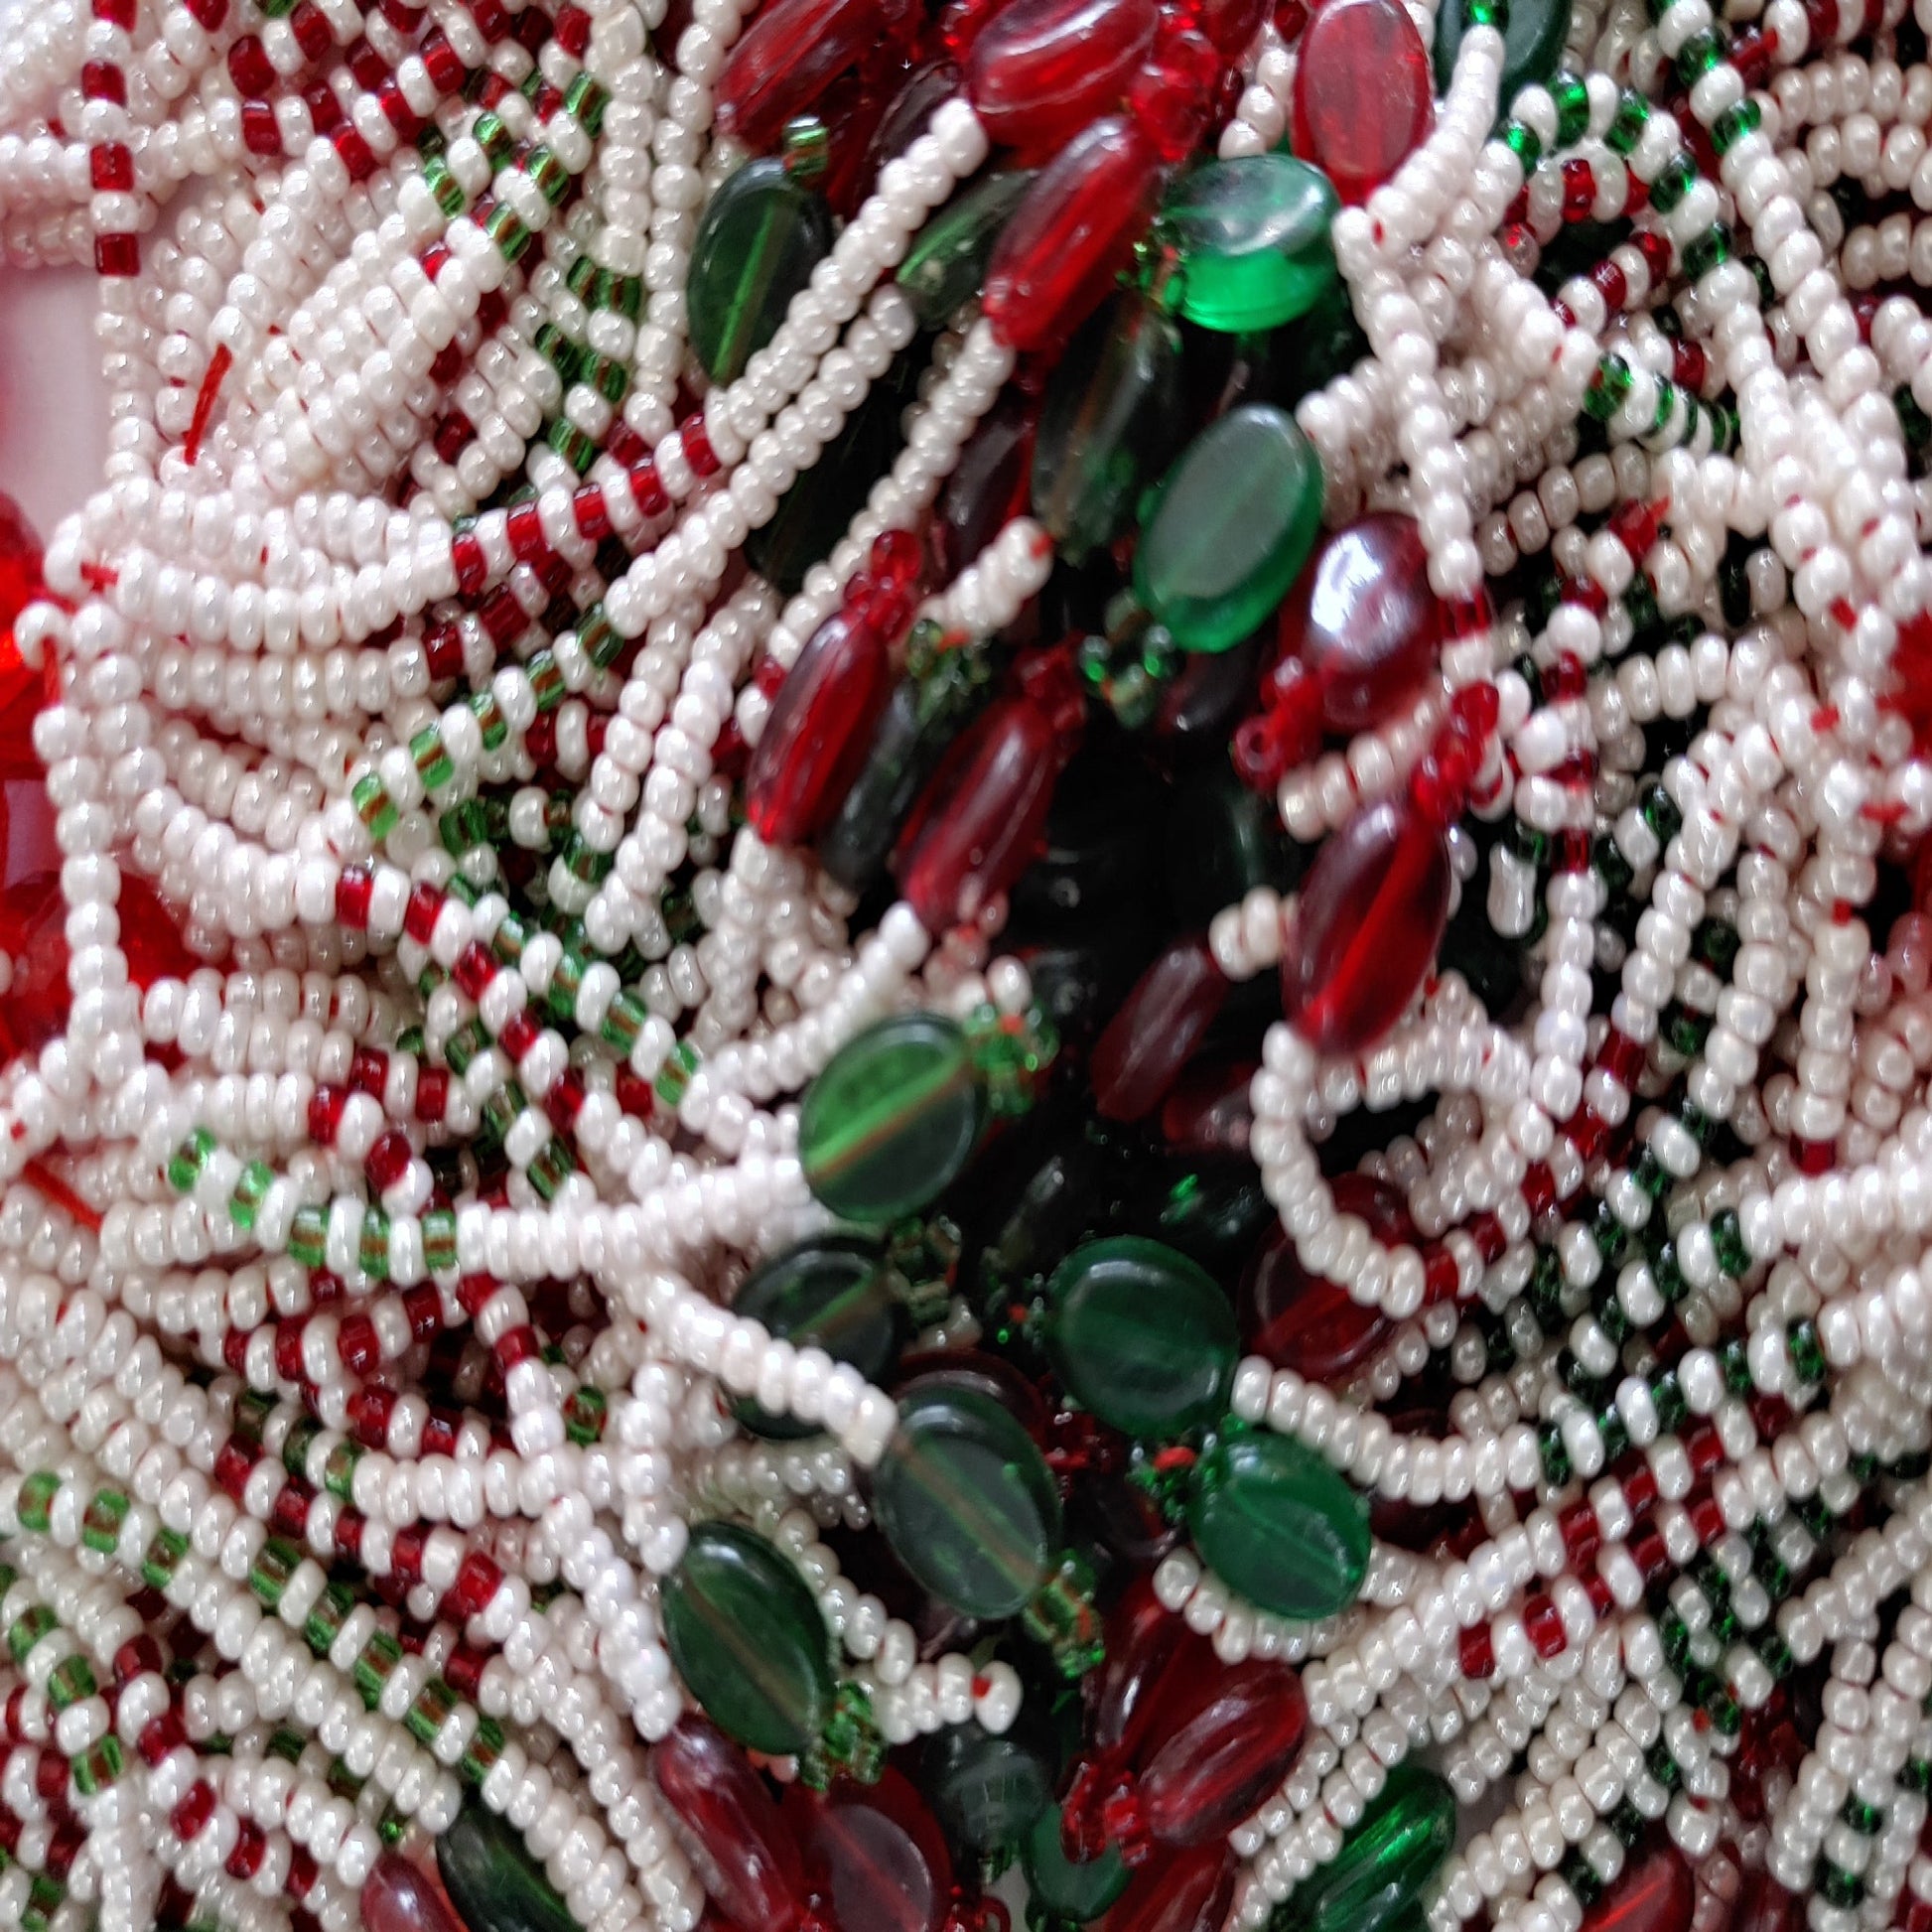 Indian Petals seed-bead-and-multi-colored-glass-bead-multi-purpose-fringe-tassel